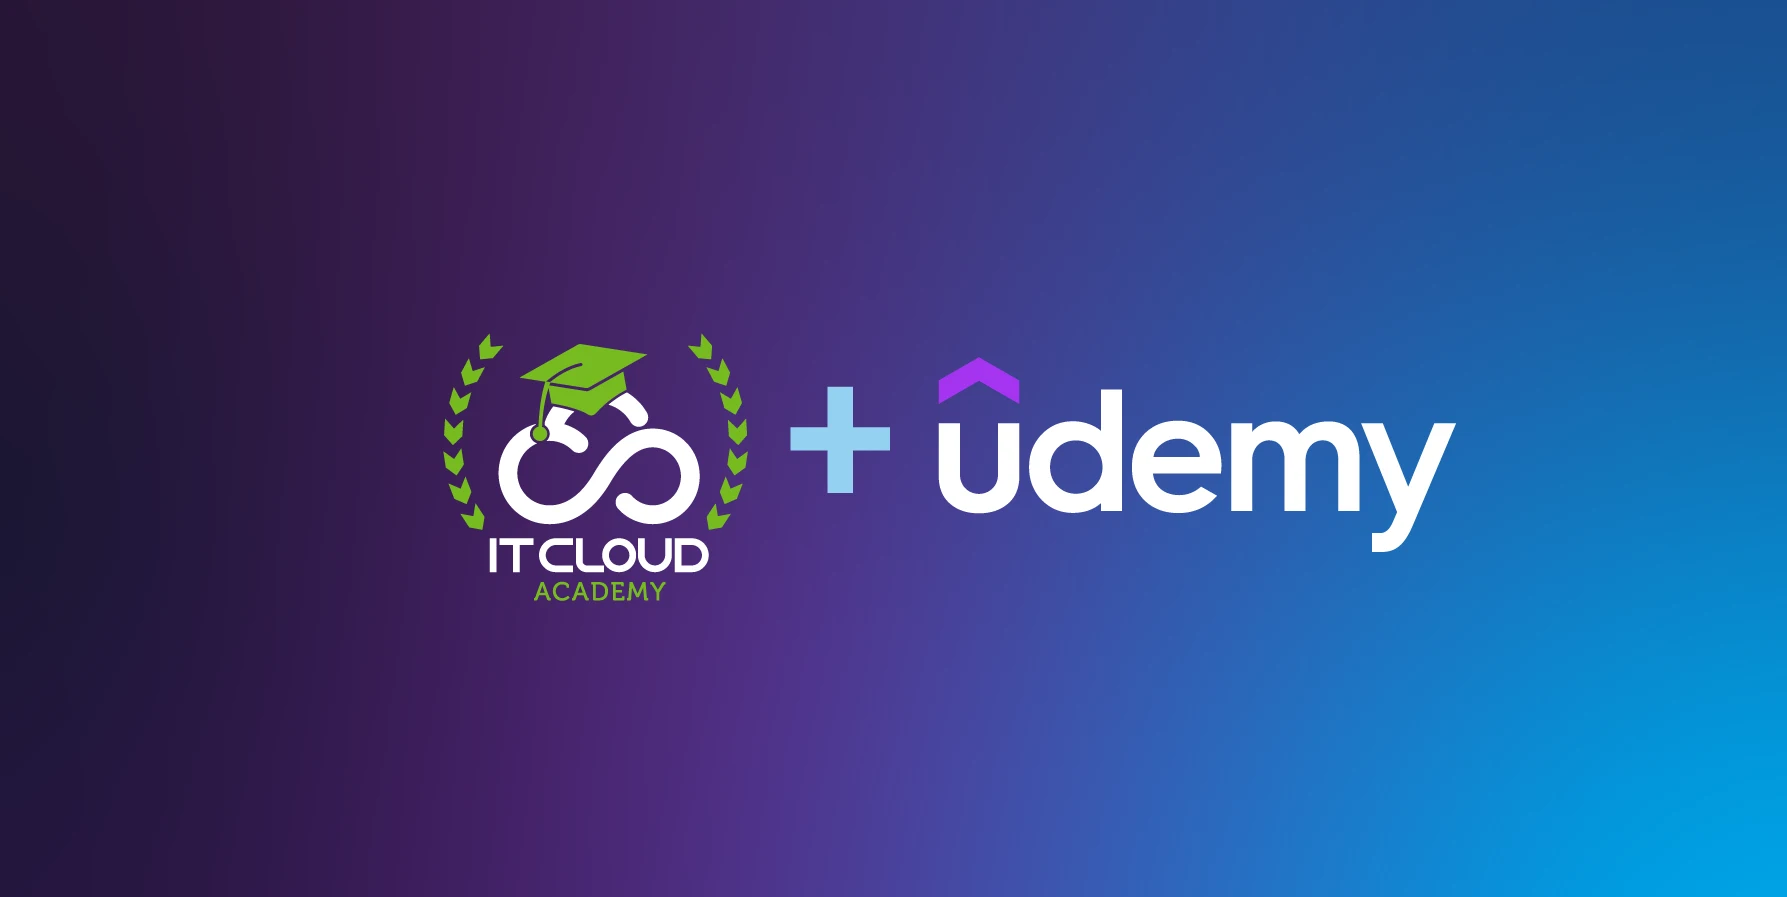 ITCloud Academy and Udemy